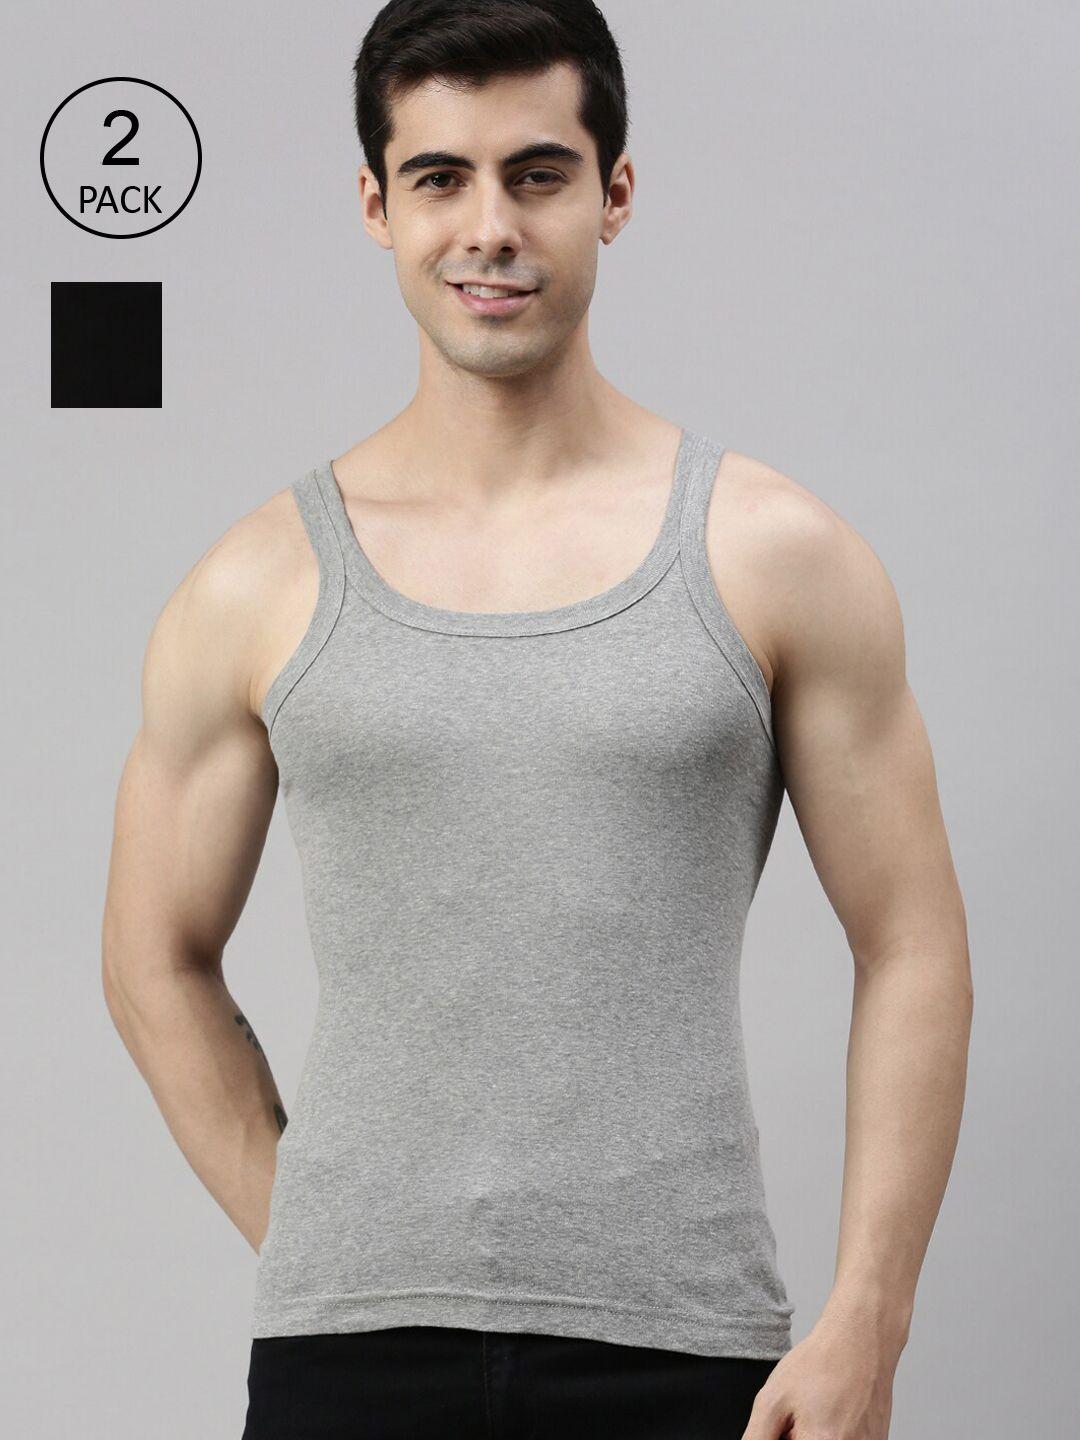 lux-cozi-men-pack-of-2-black-&-grey-solid-pure-cotton-gym-vests